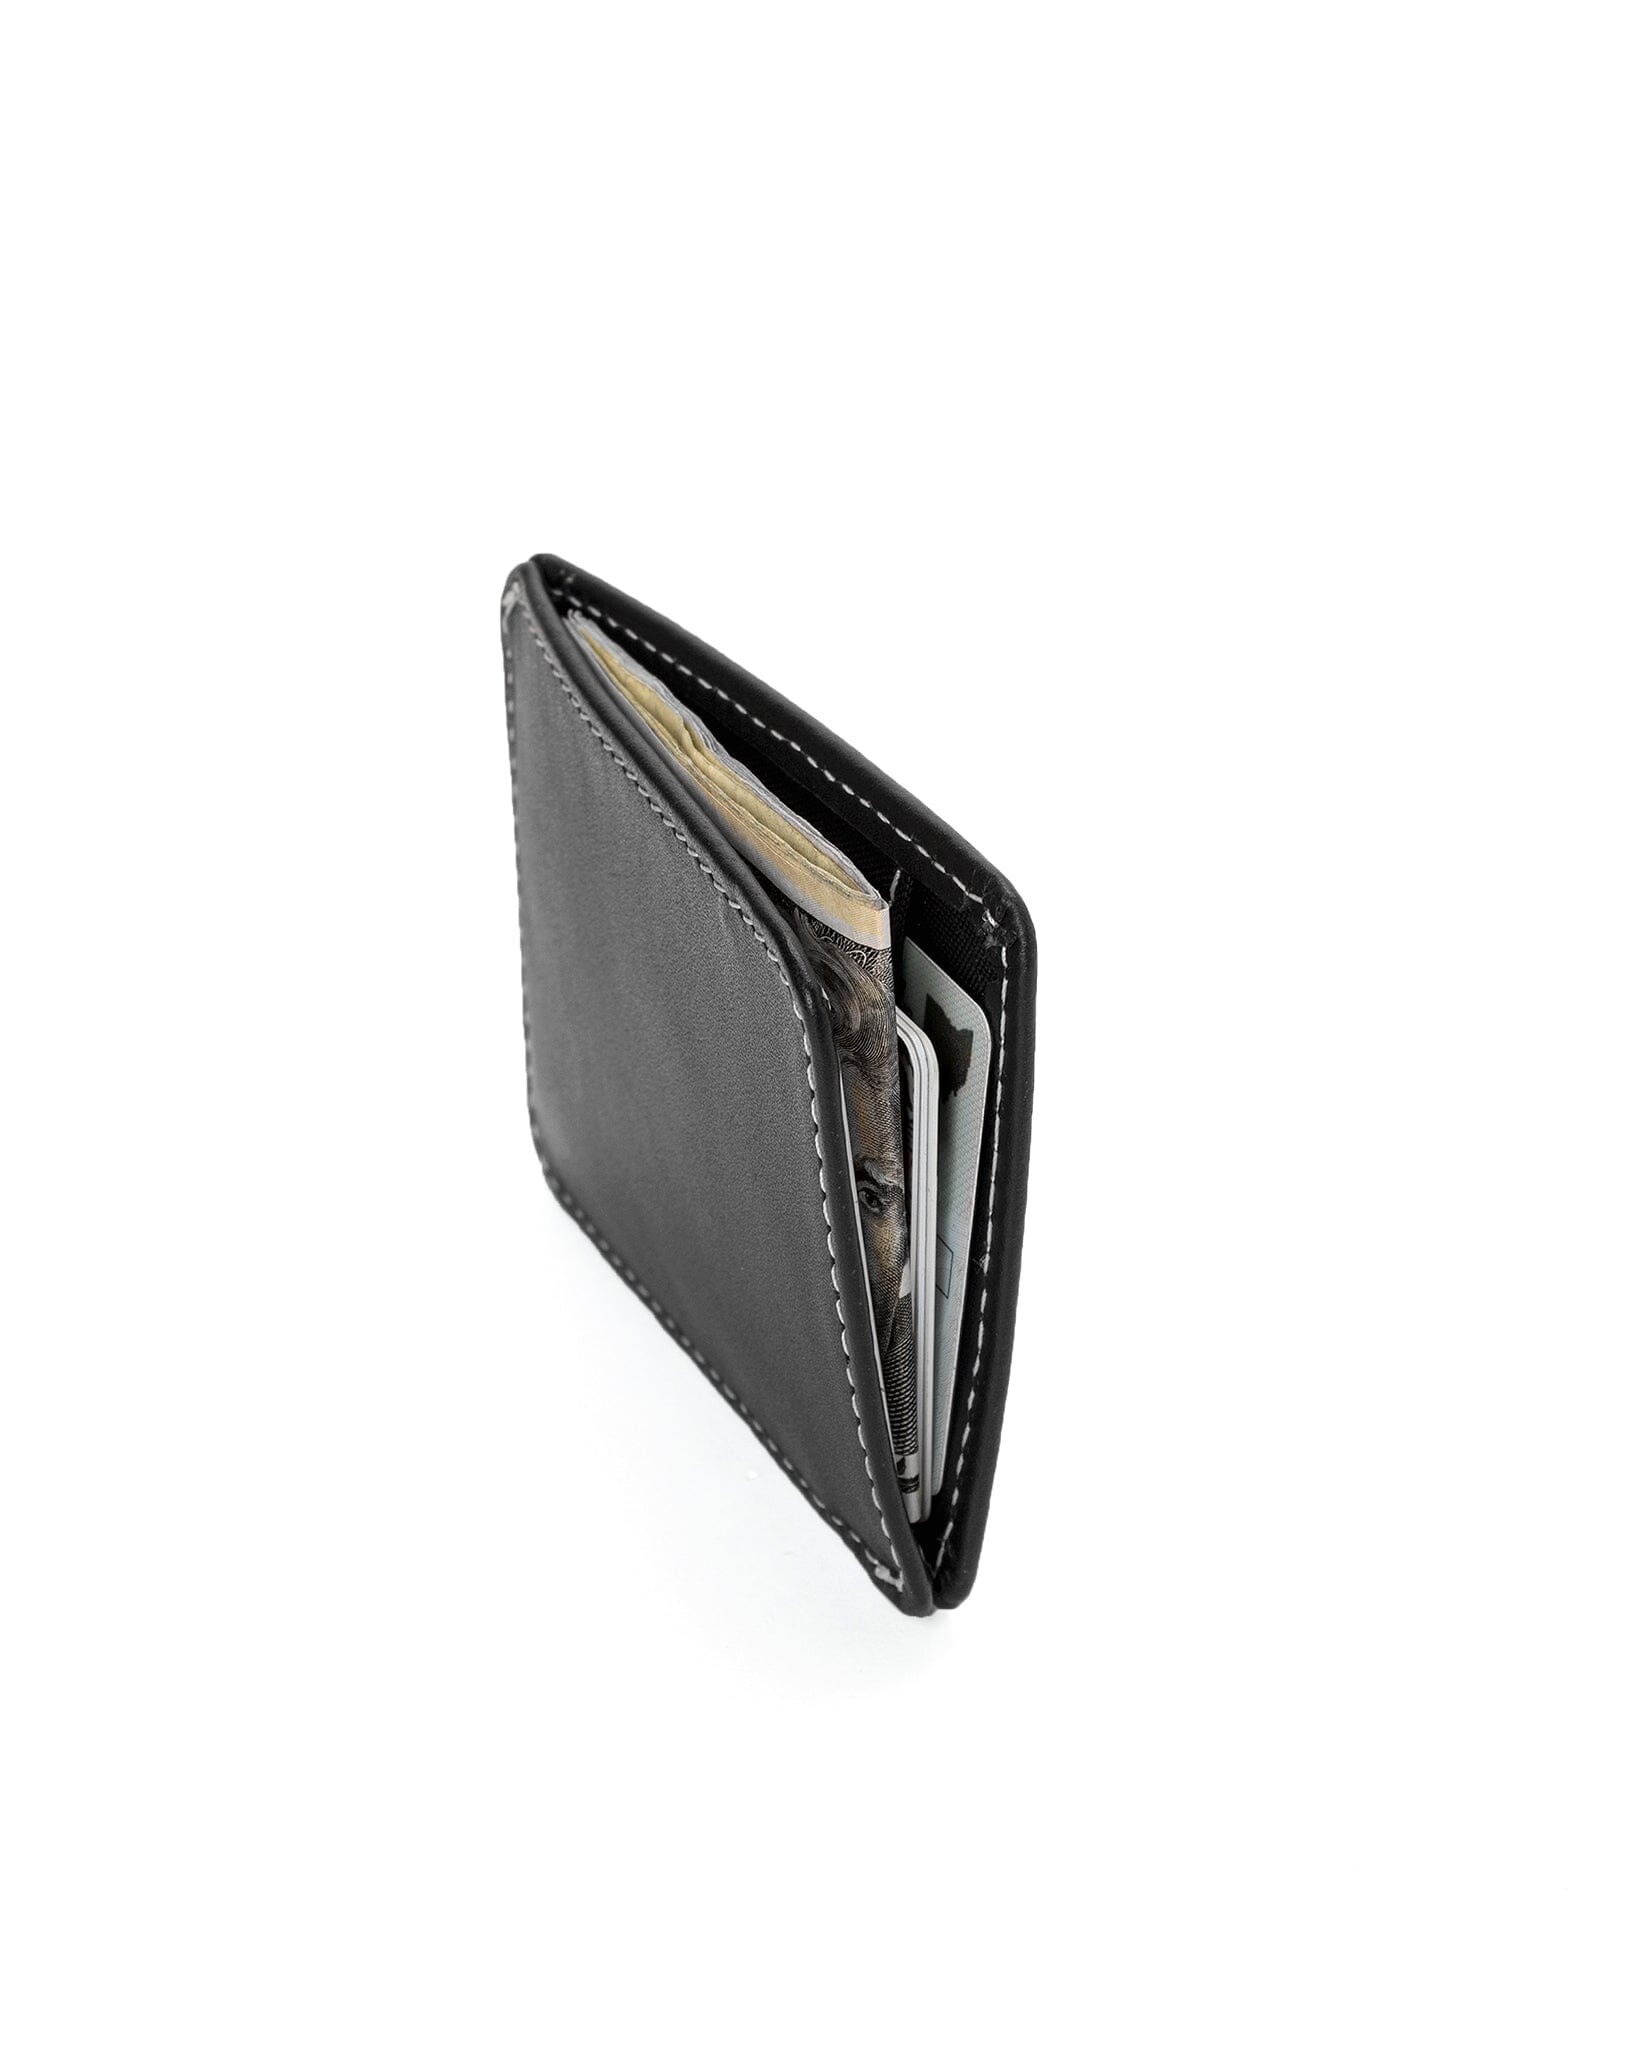 Slimmy R1SO 1-Pocket (78mm) Slim Minimalist Wallet - Black - RFID EDC